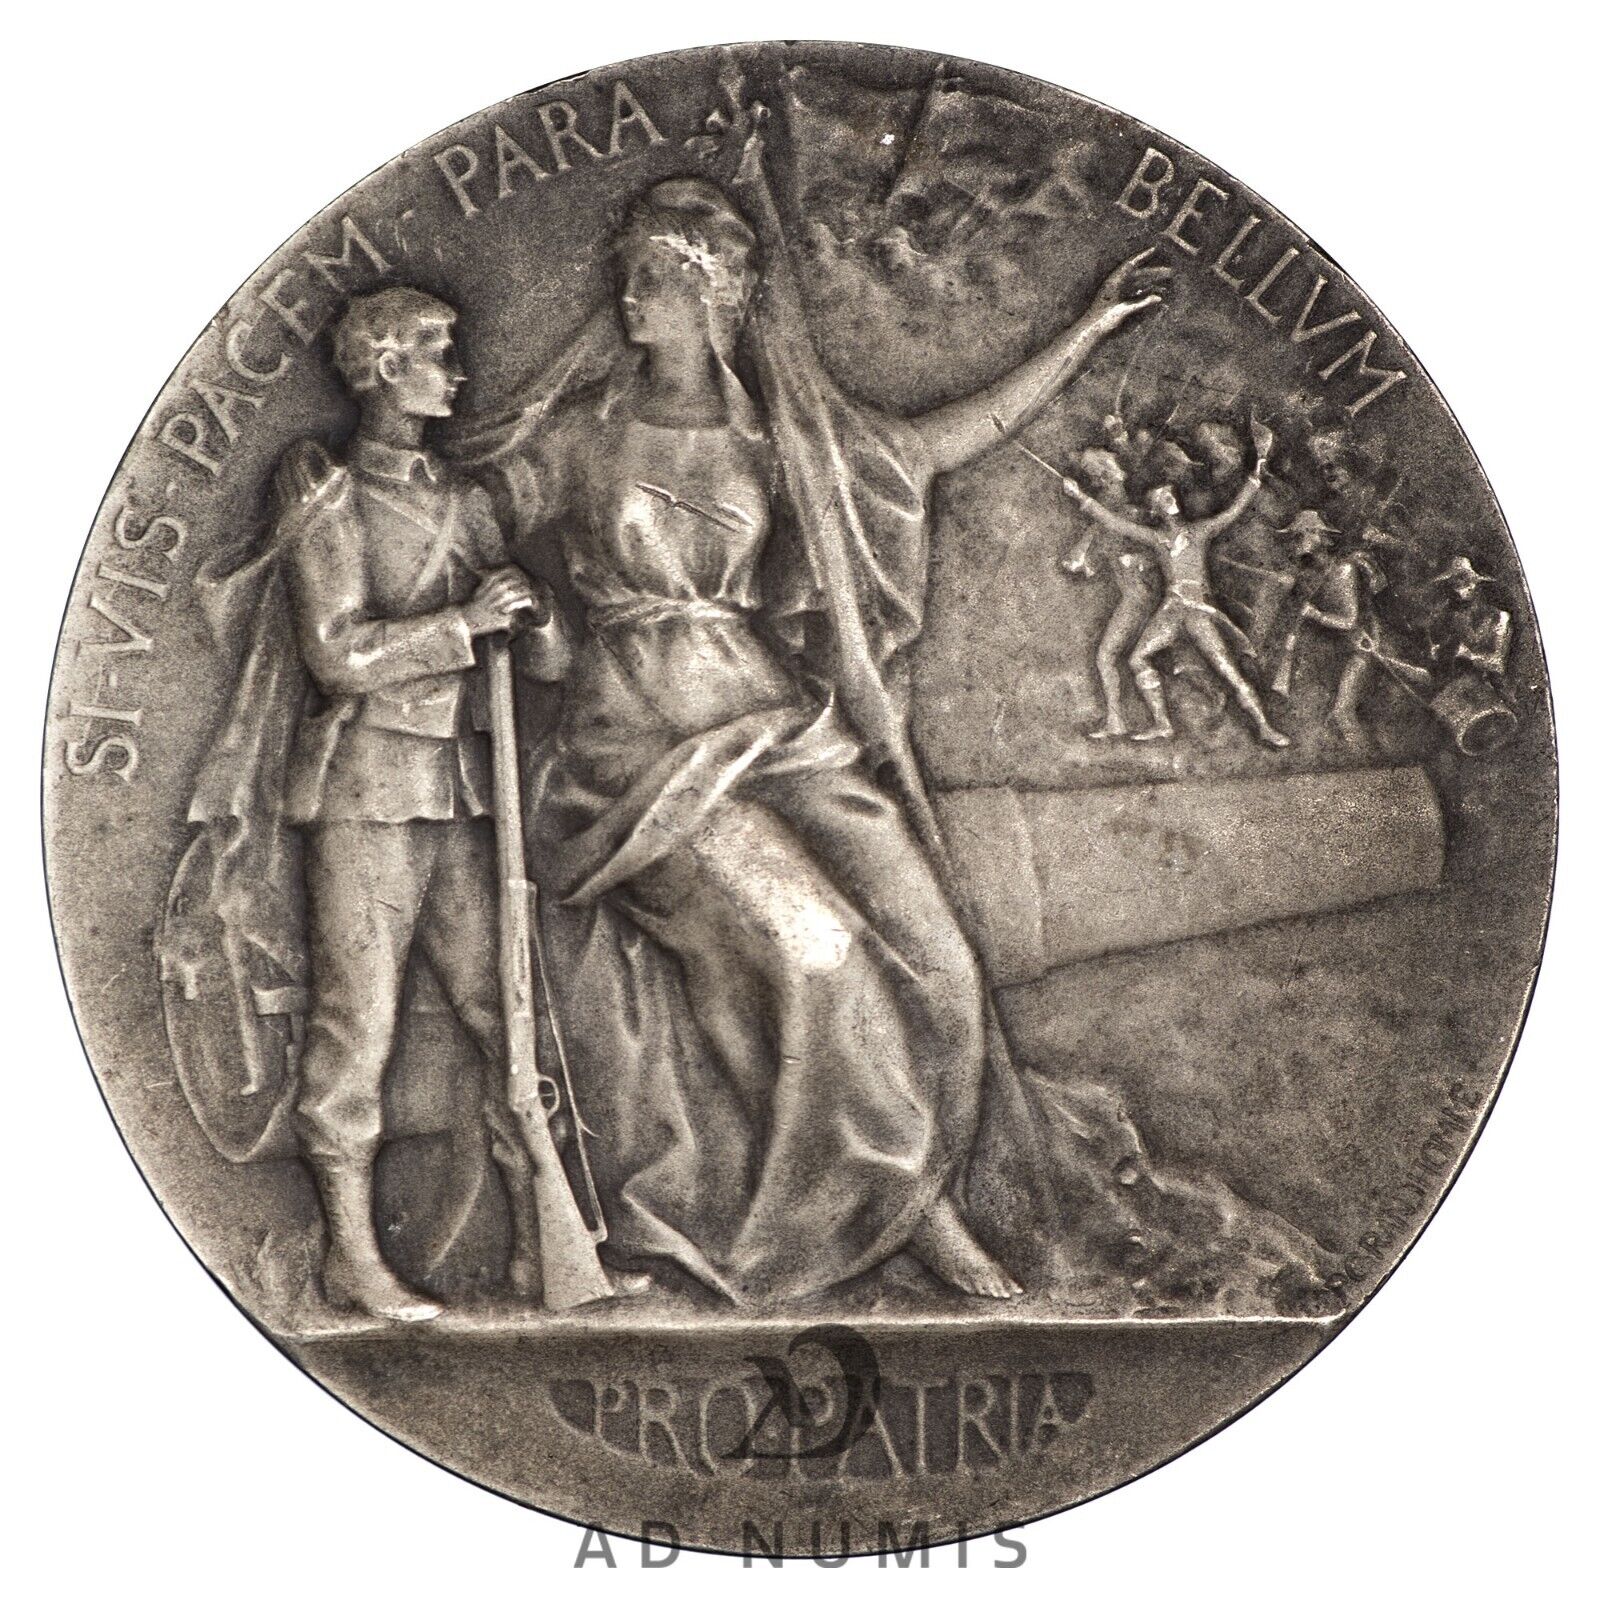 France Medal Prix of / The Minister La Guerre Strength Courage Silver 1er Title